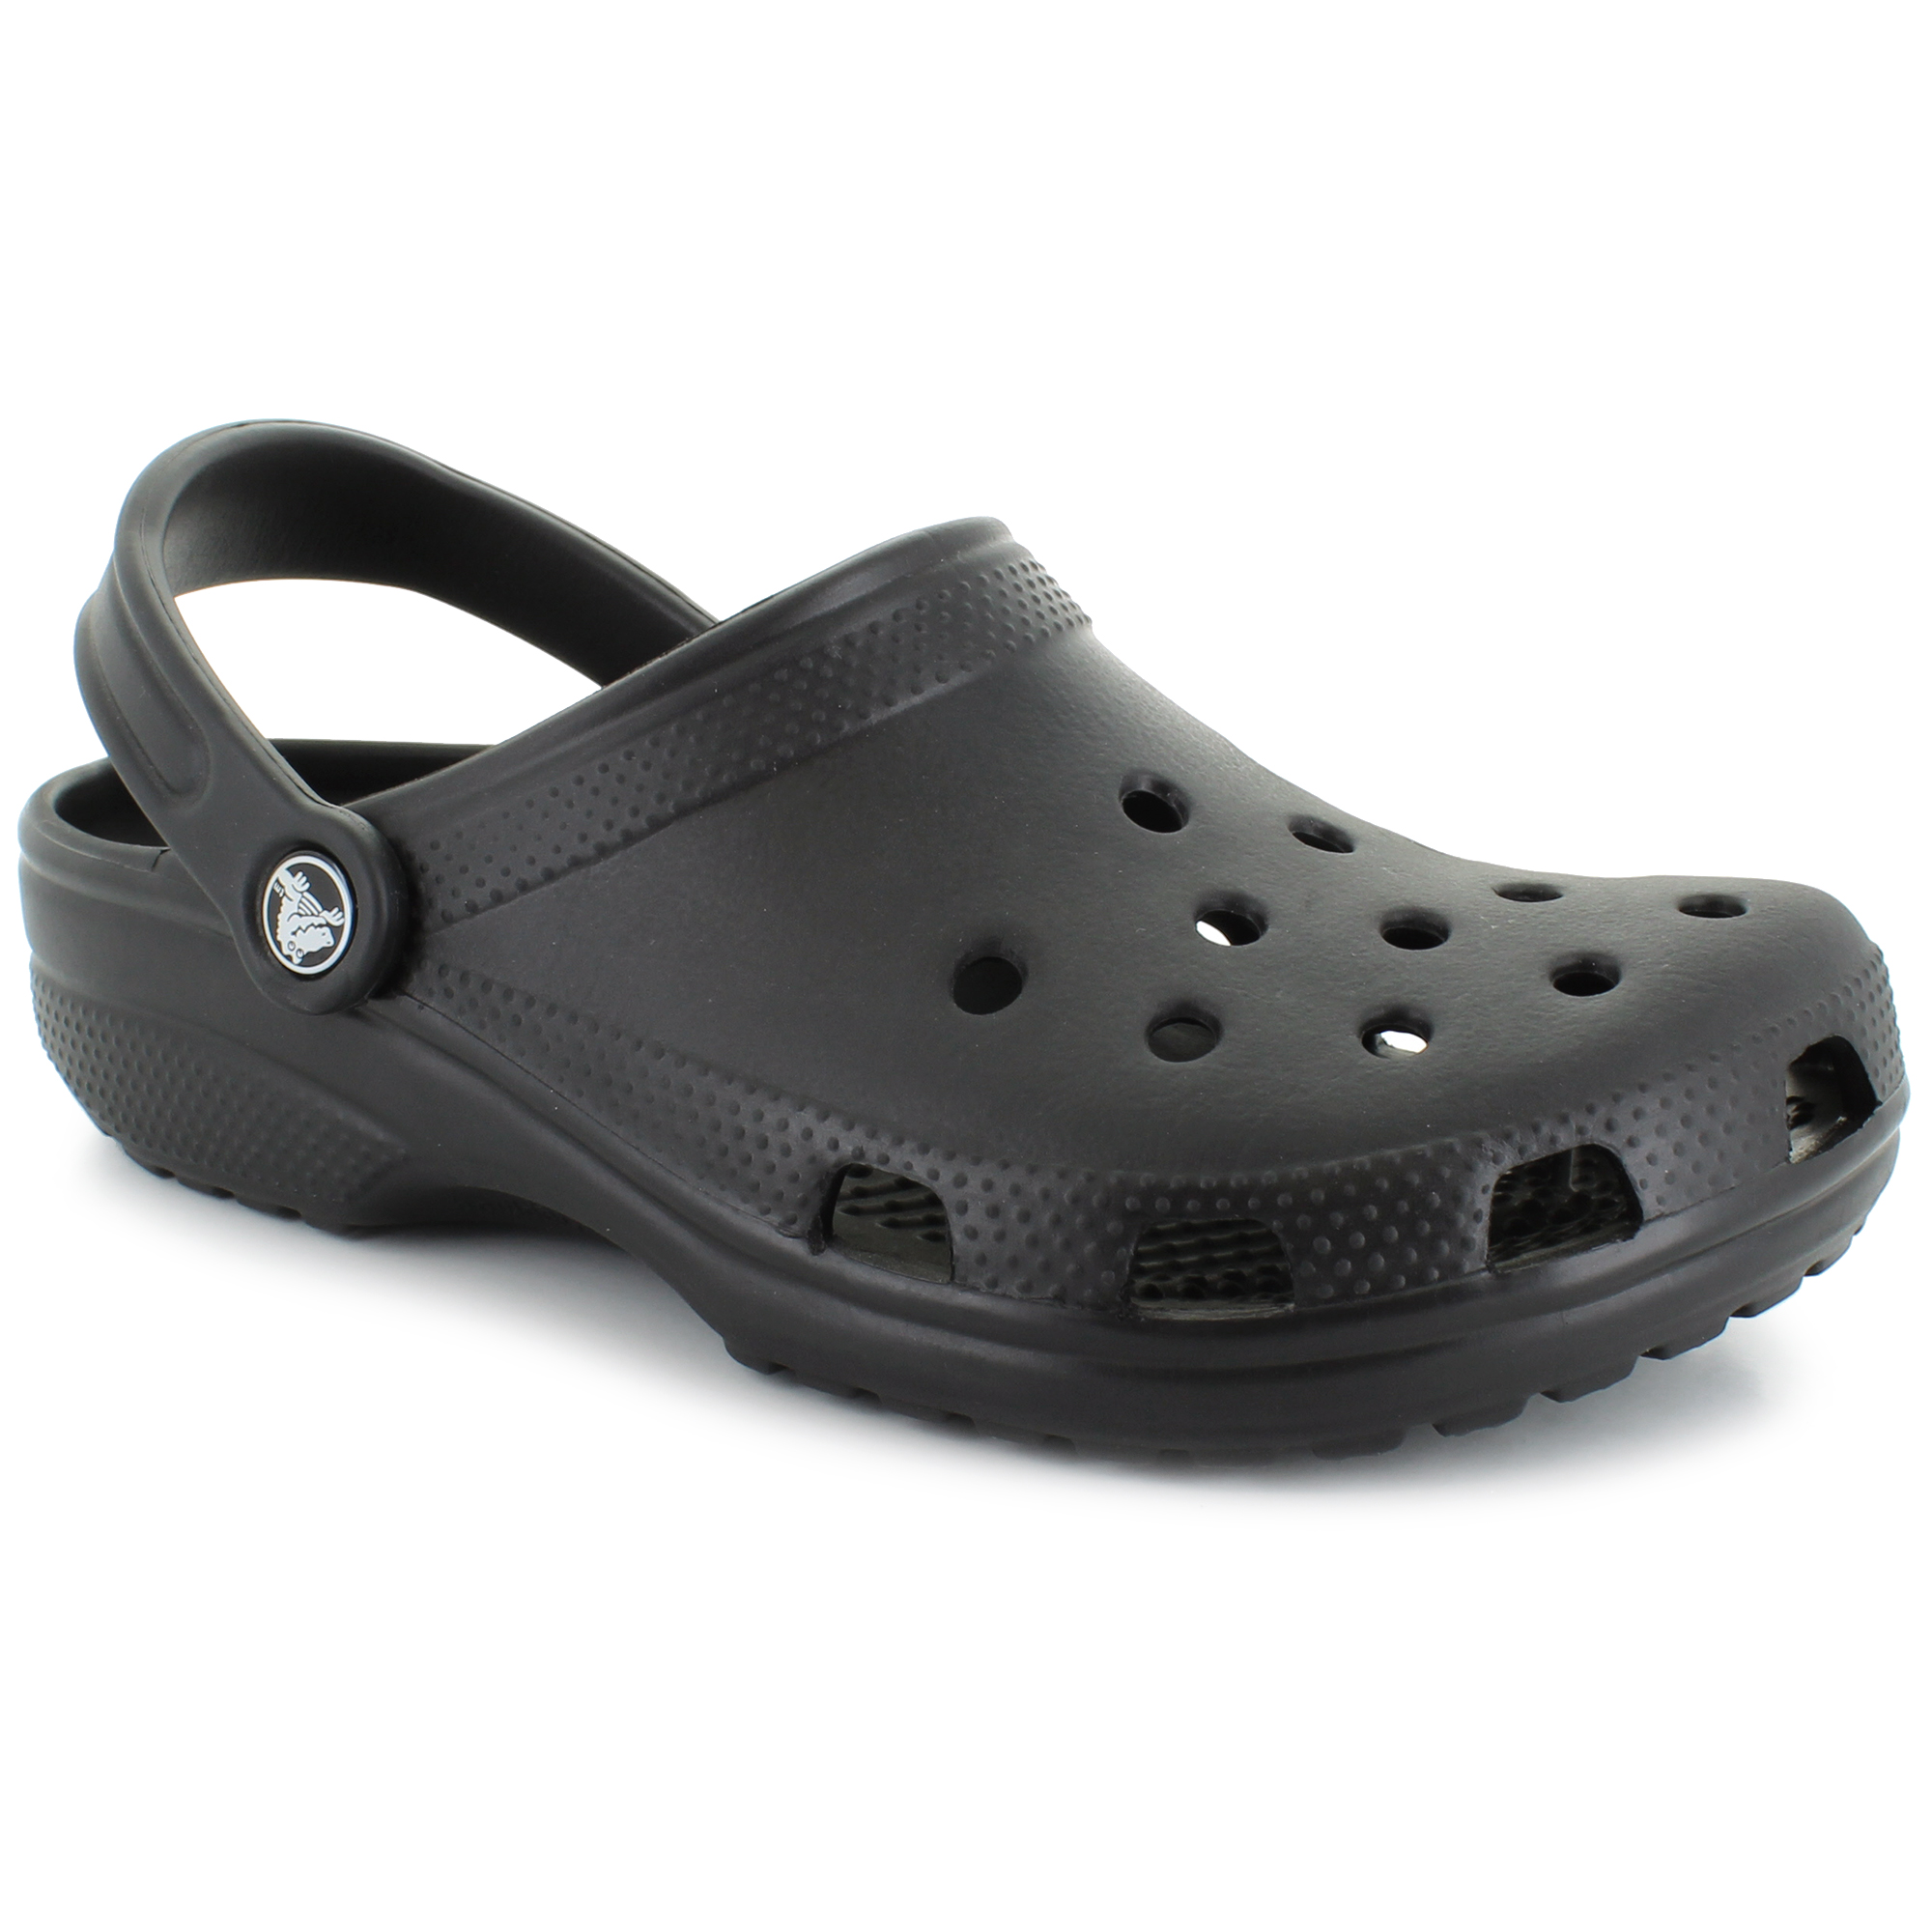 shoe dept crocs